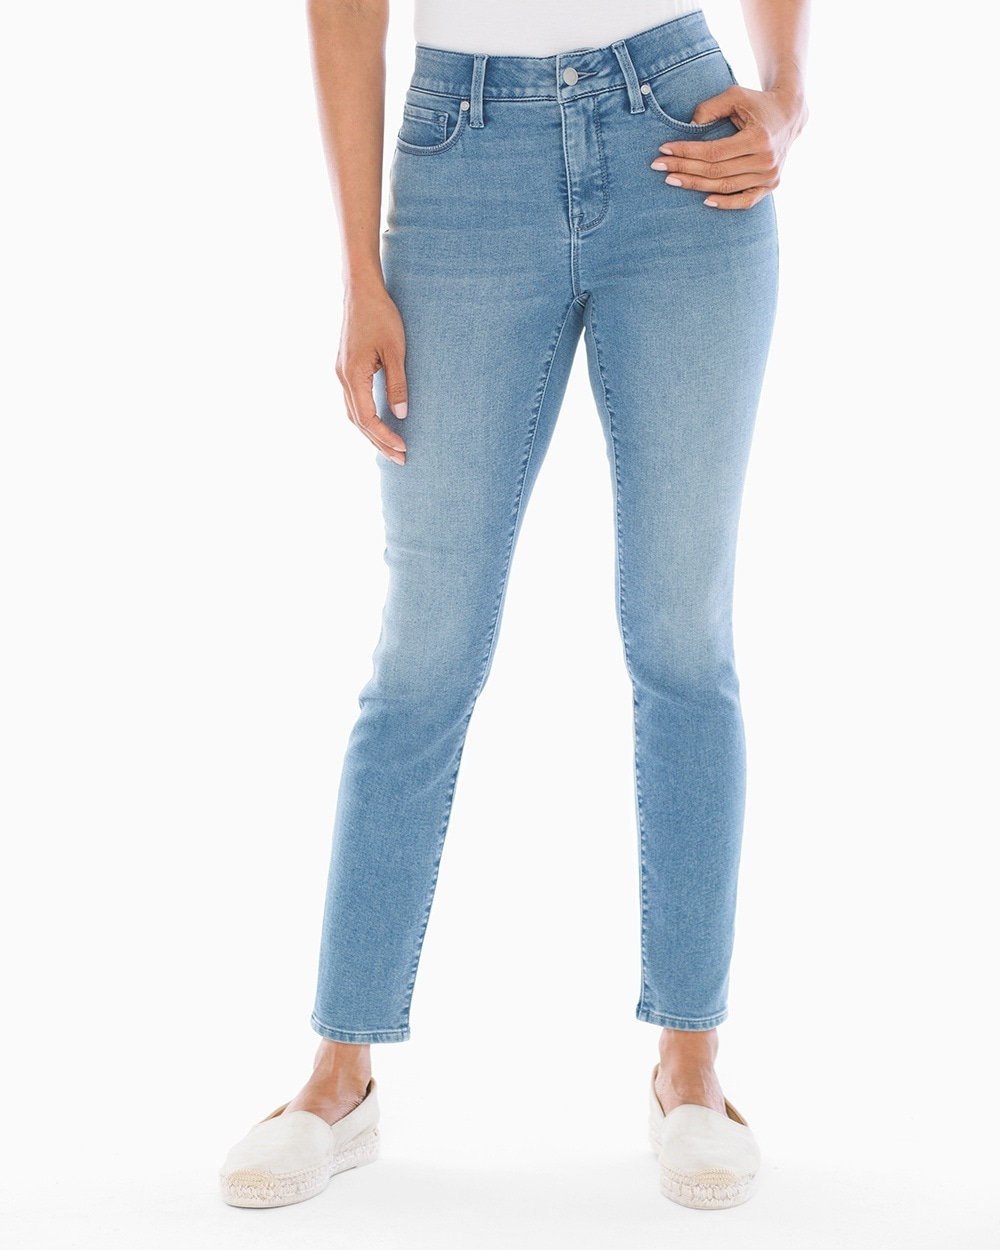 Style Essentials Slimming 5 Pocket Jeans Light Wash